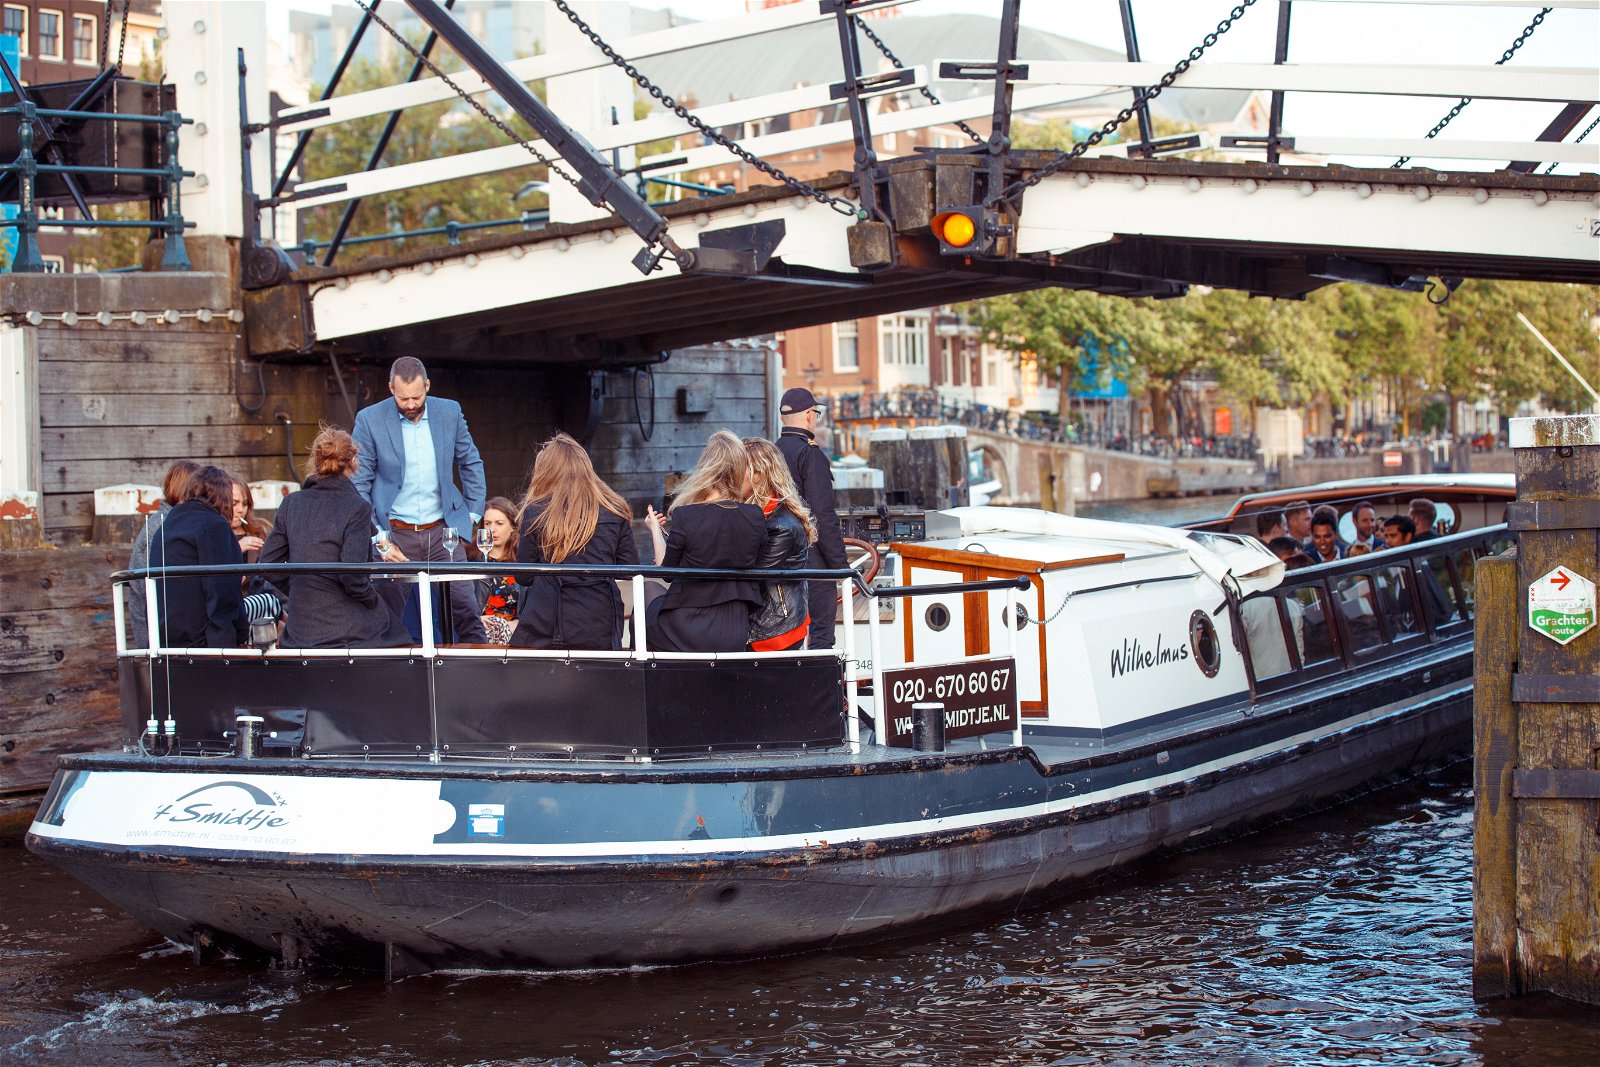 Canal barge Wilhelmus